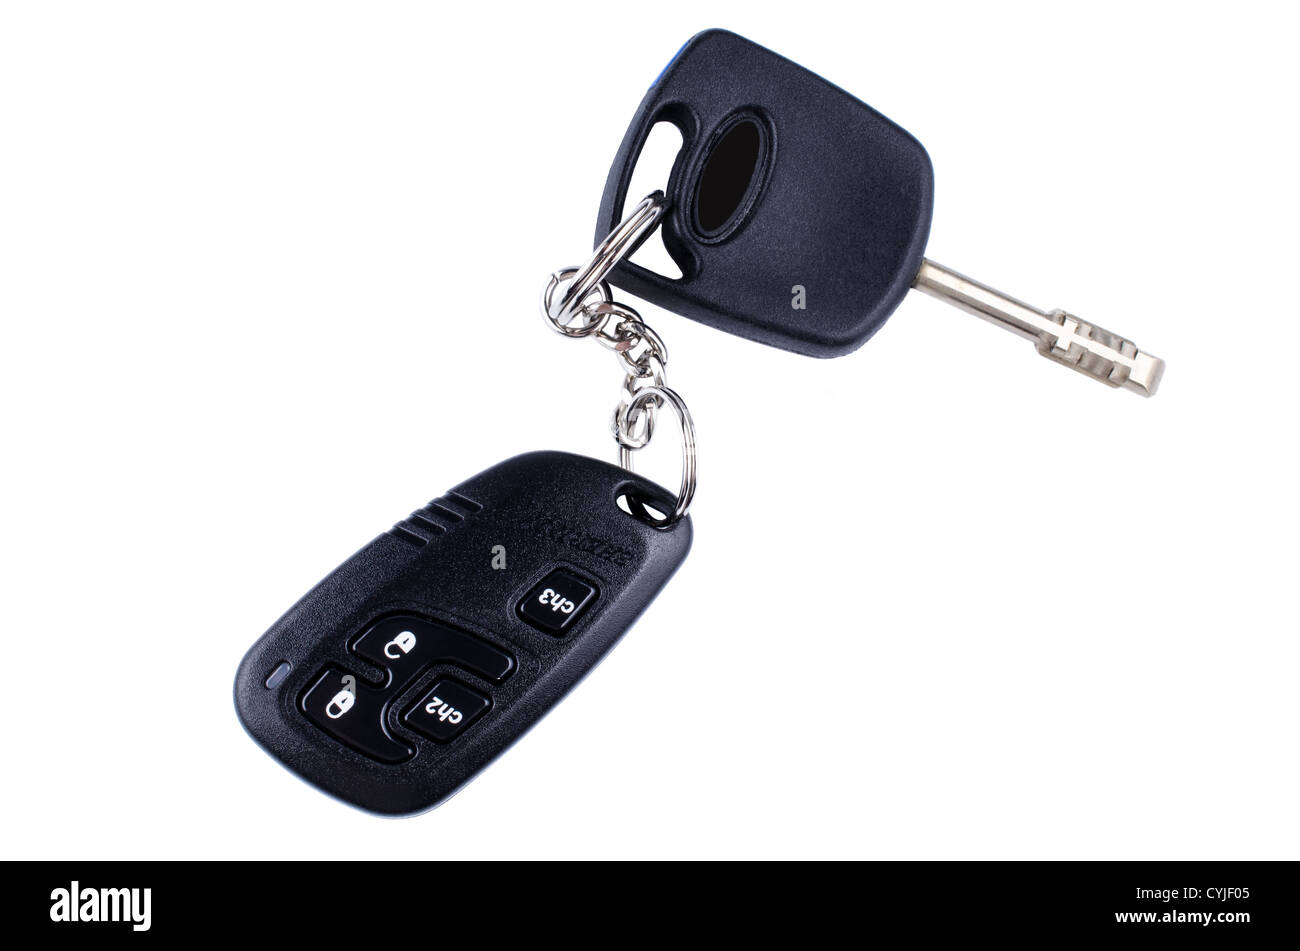 Remote car key isolated on white background Stock Photo